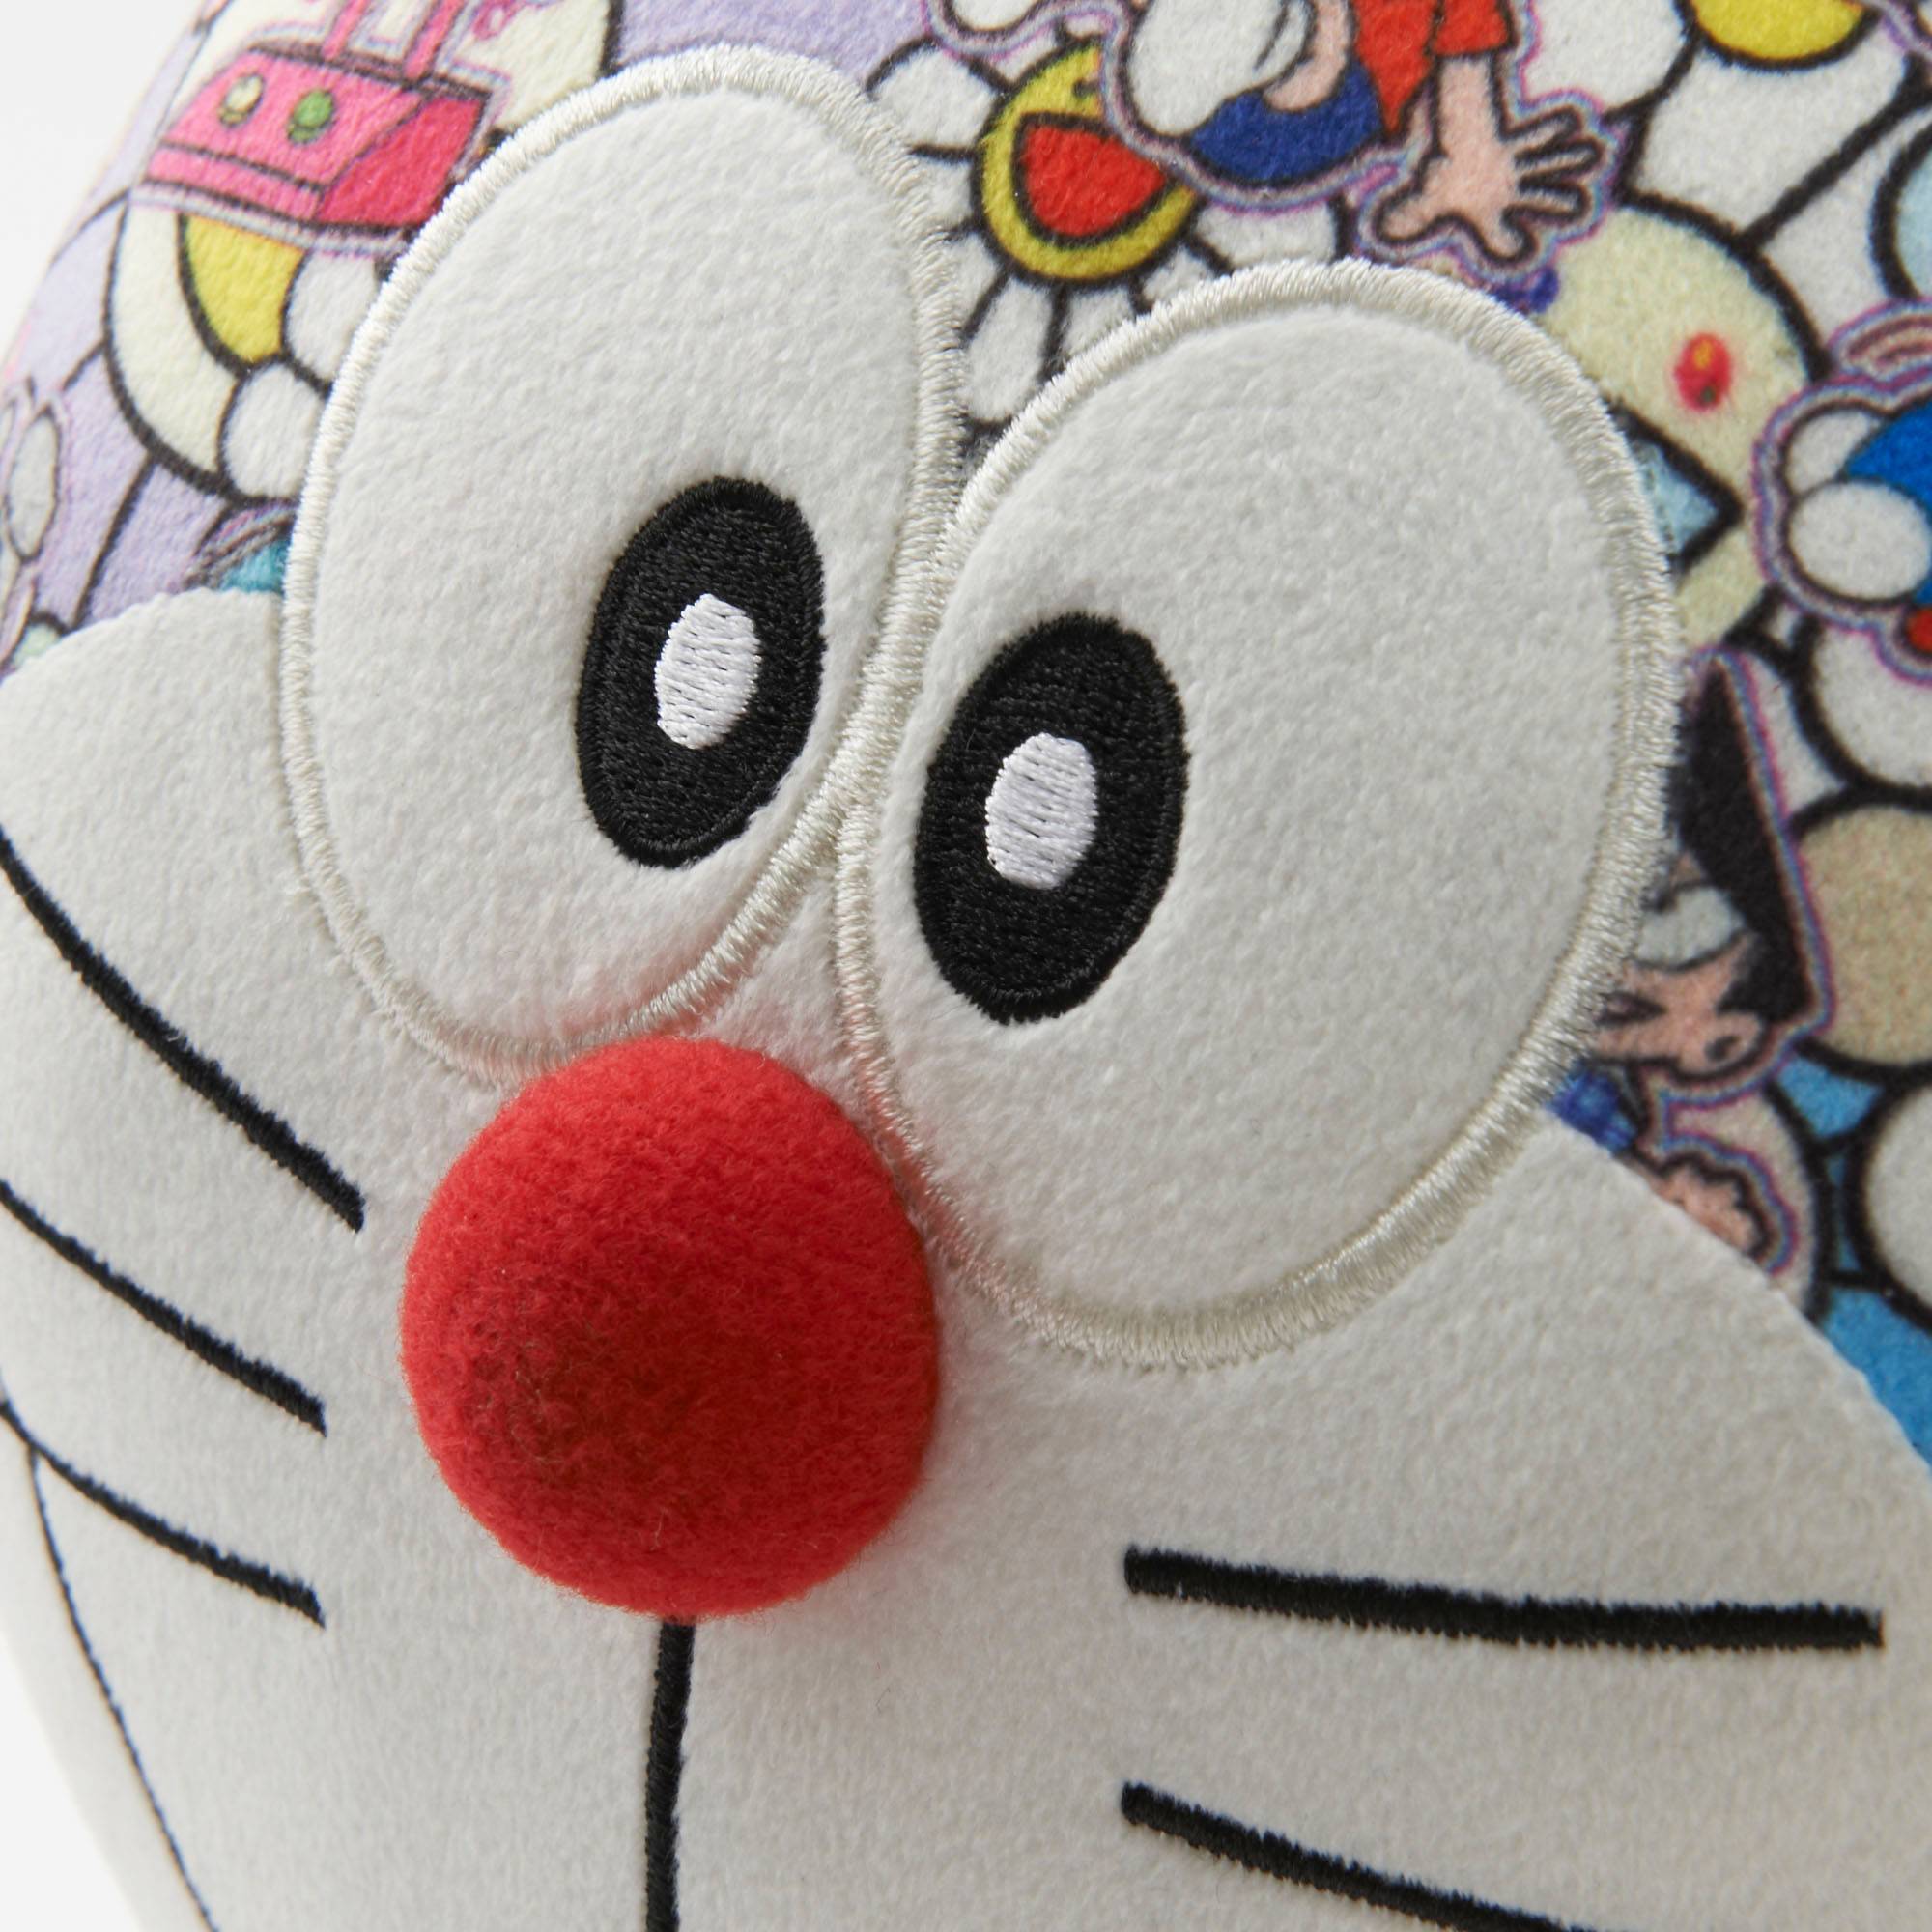 Doraemon Limited Edition Plush Toy by Uniqlo x Takashi Murakami